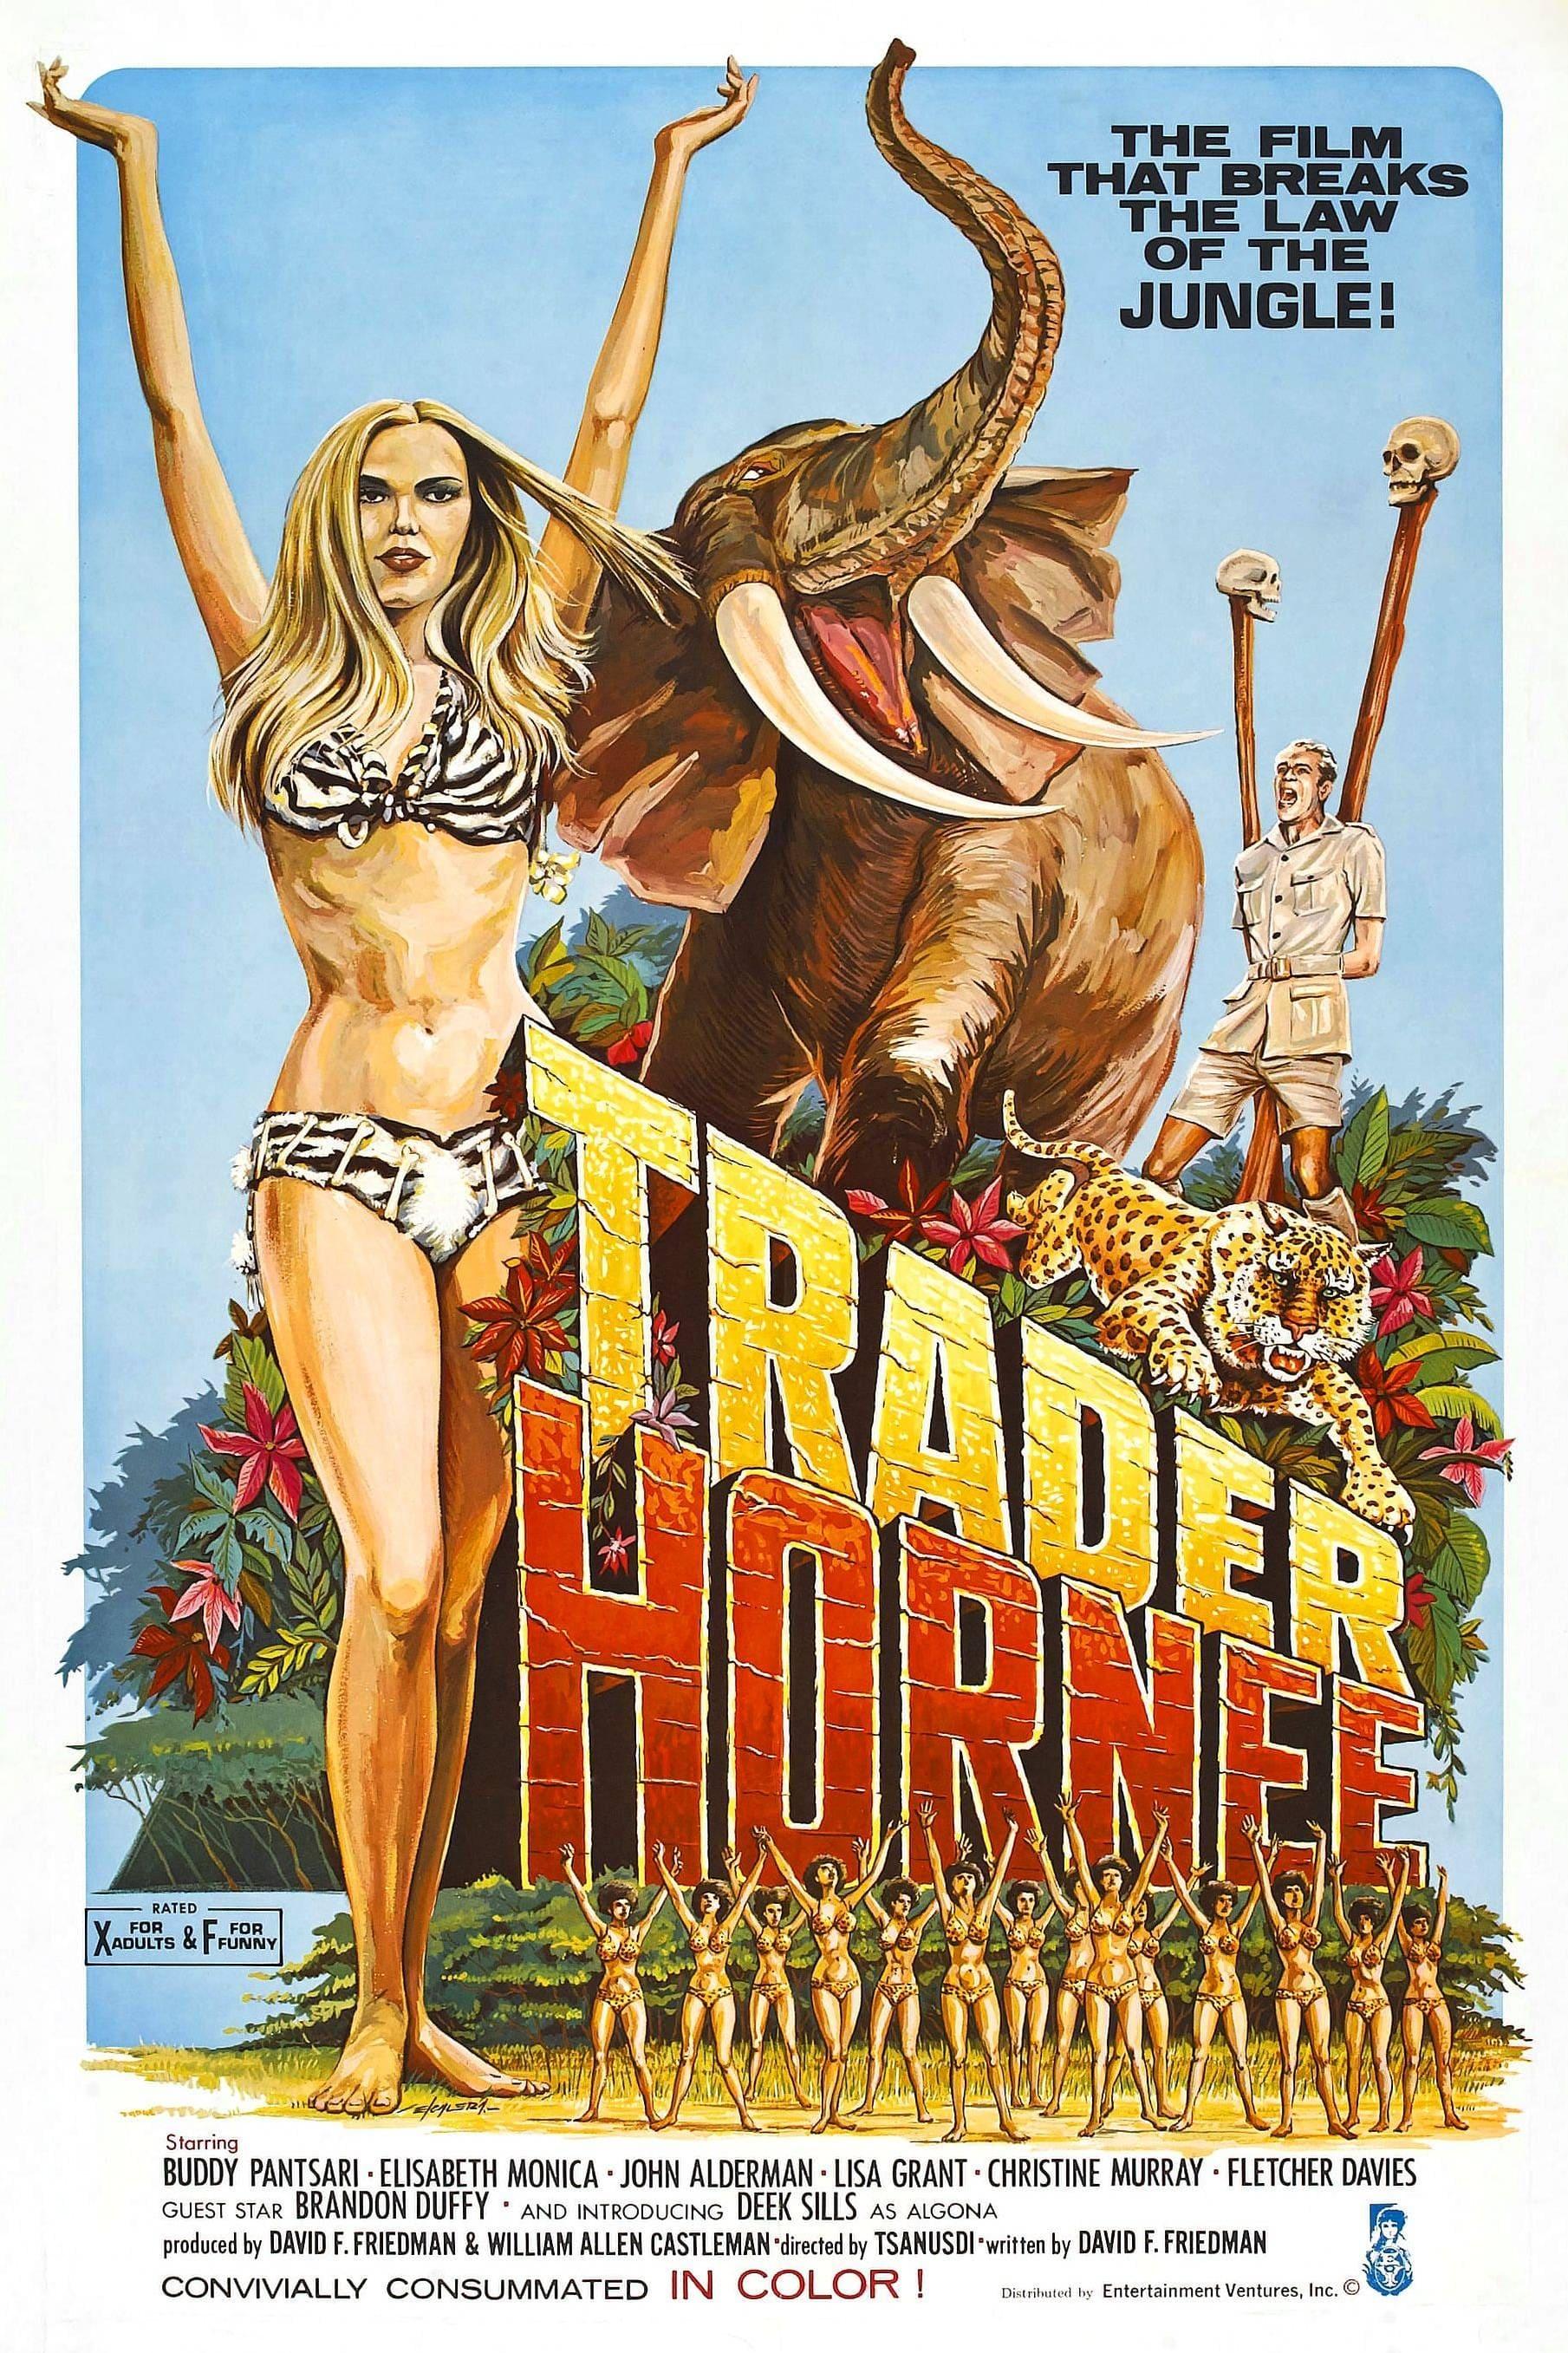 Trader Hornee poster